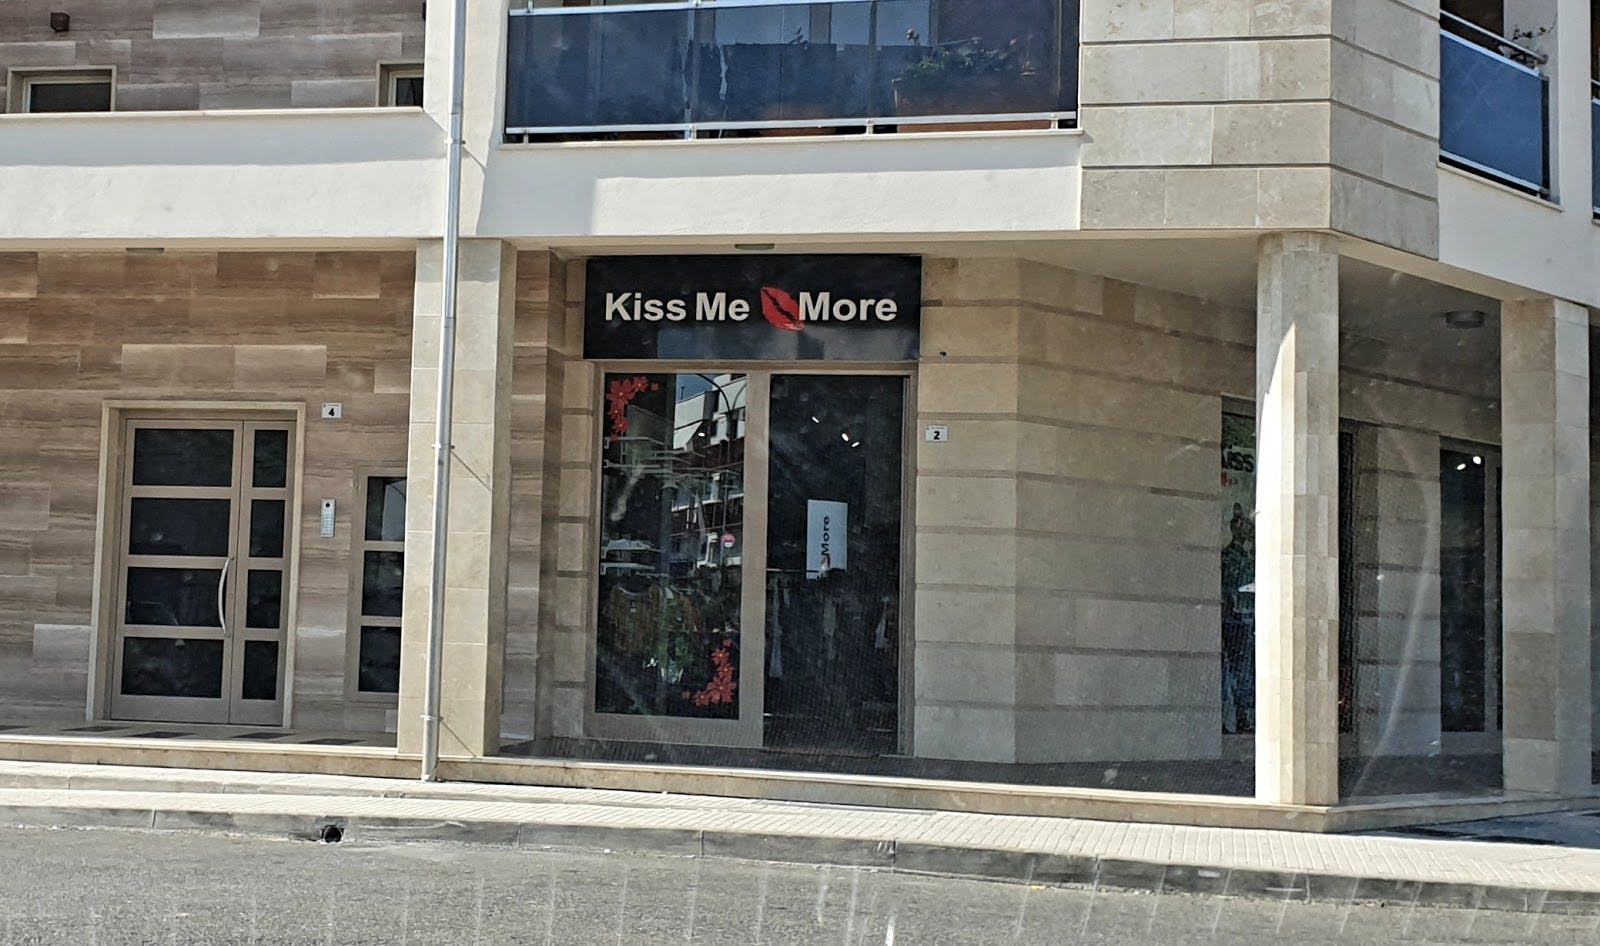 Image - Kiss Me More